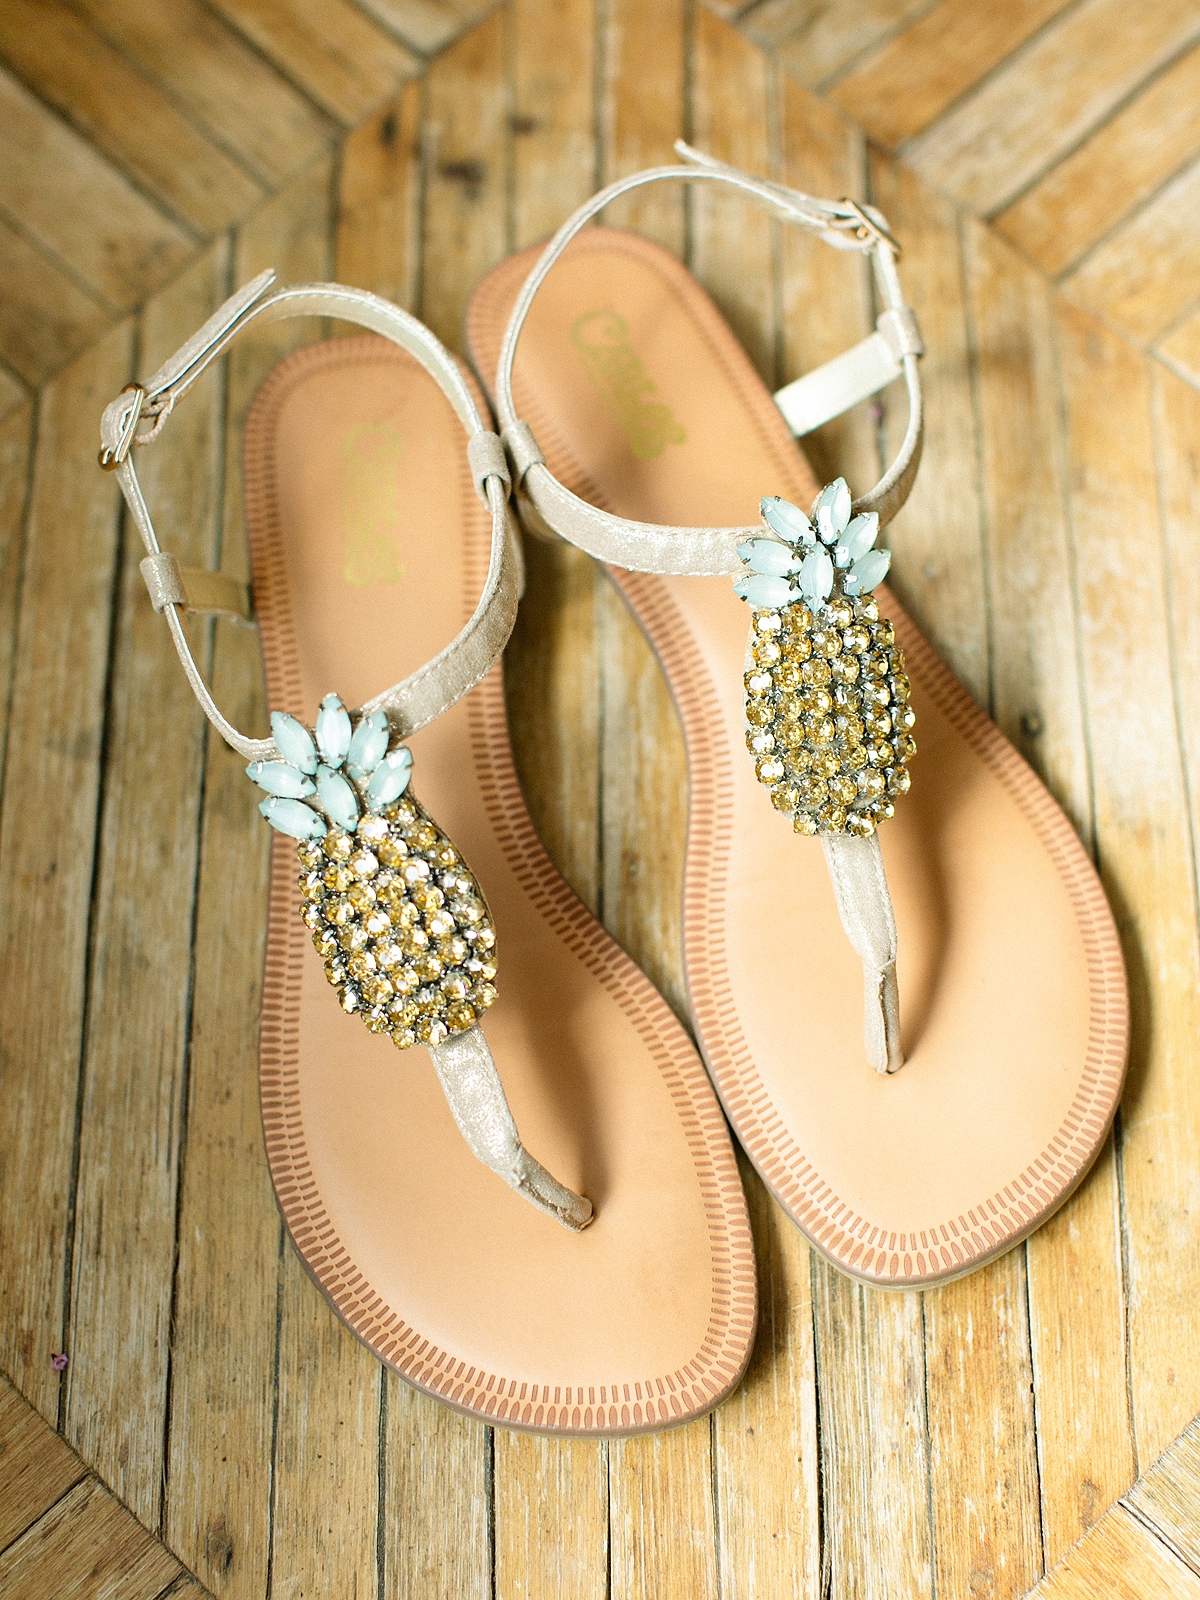 Pineapple shoes by Oahu wedding photographer, Laura Ivanova